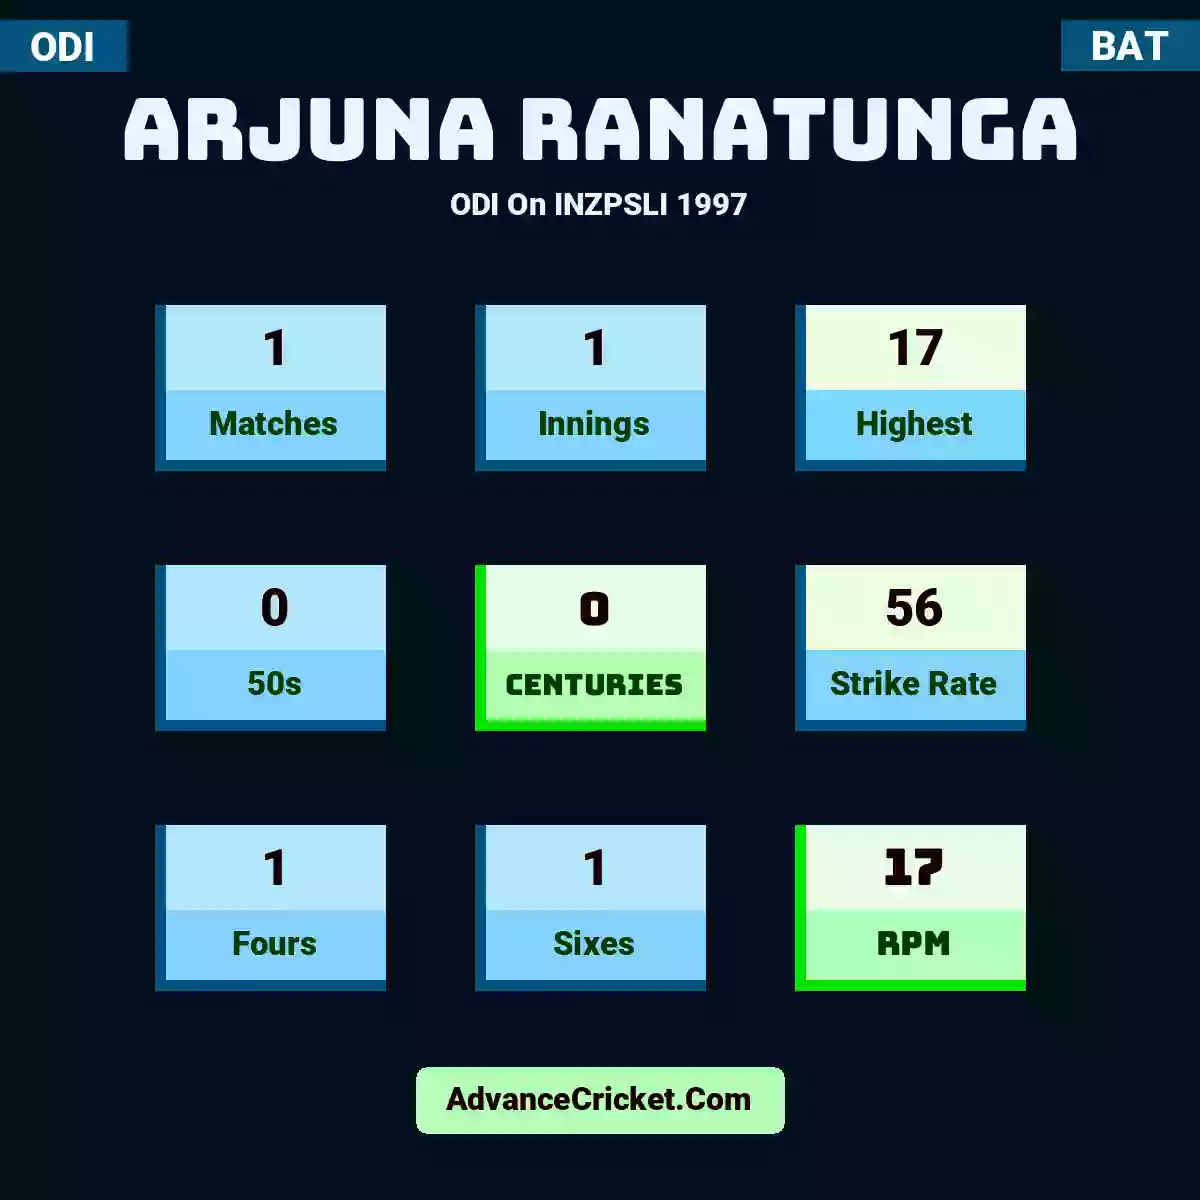 Arjuna Ranatunga ODI  On INZPSLI 1997, Arjuna Ranatunga played 1 matches, scored 17 runs as highest, 0 half-centuries, and 0 centuries, with a strike rate of 56. A.Ranatunga hit 1 fours and 1 sixes, with an RPM of 17.